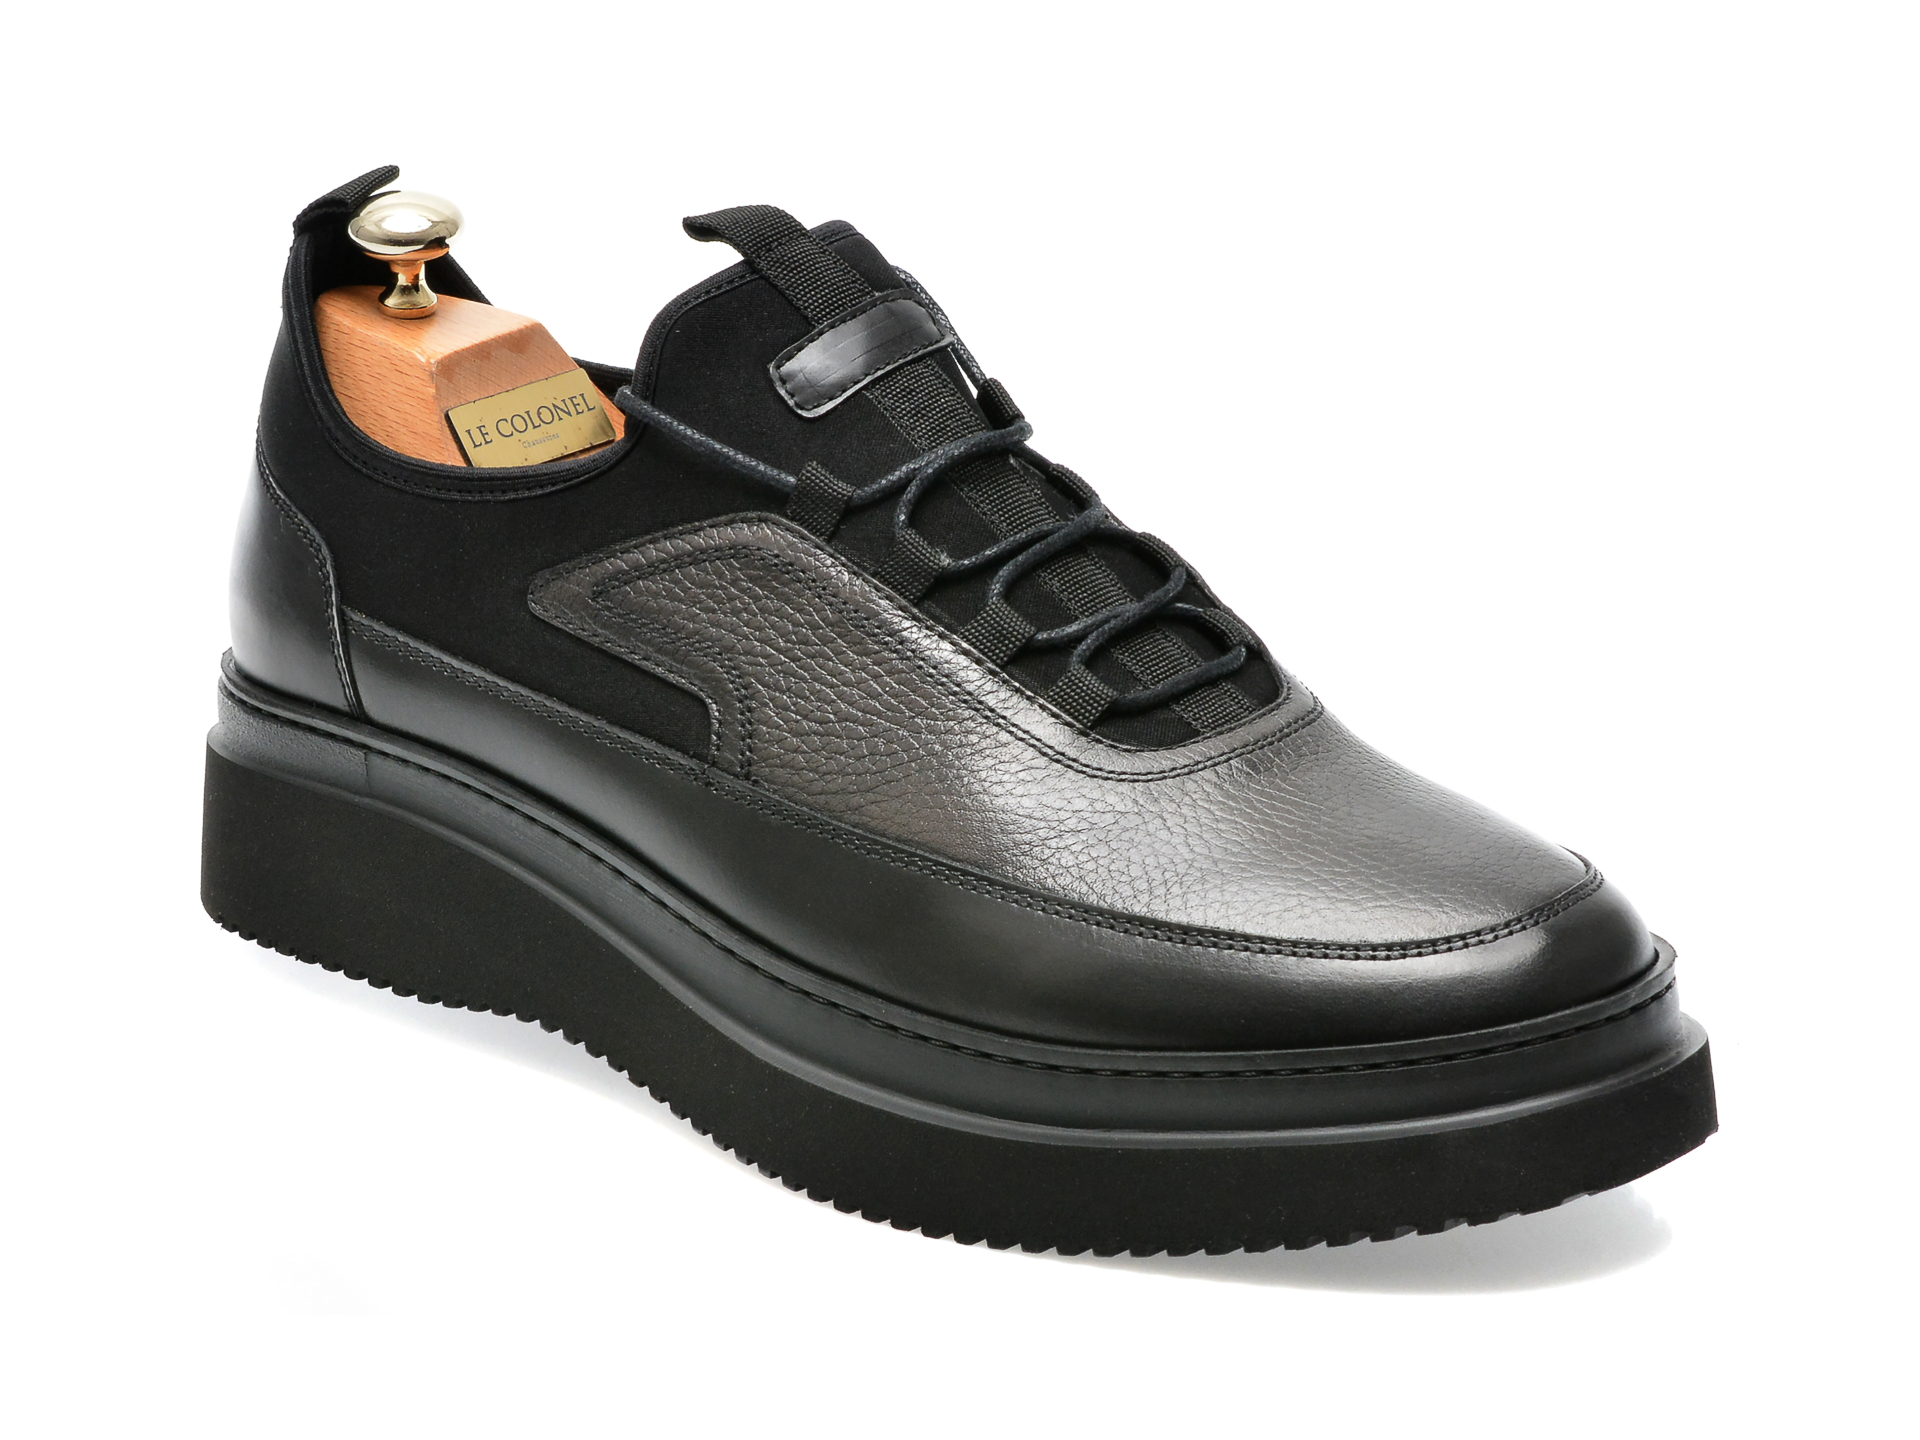 Pantofi LE COLONEL negri, 64816, din piele naturala